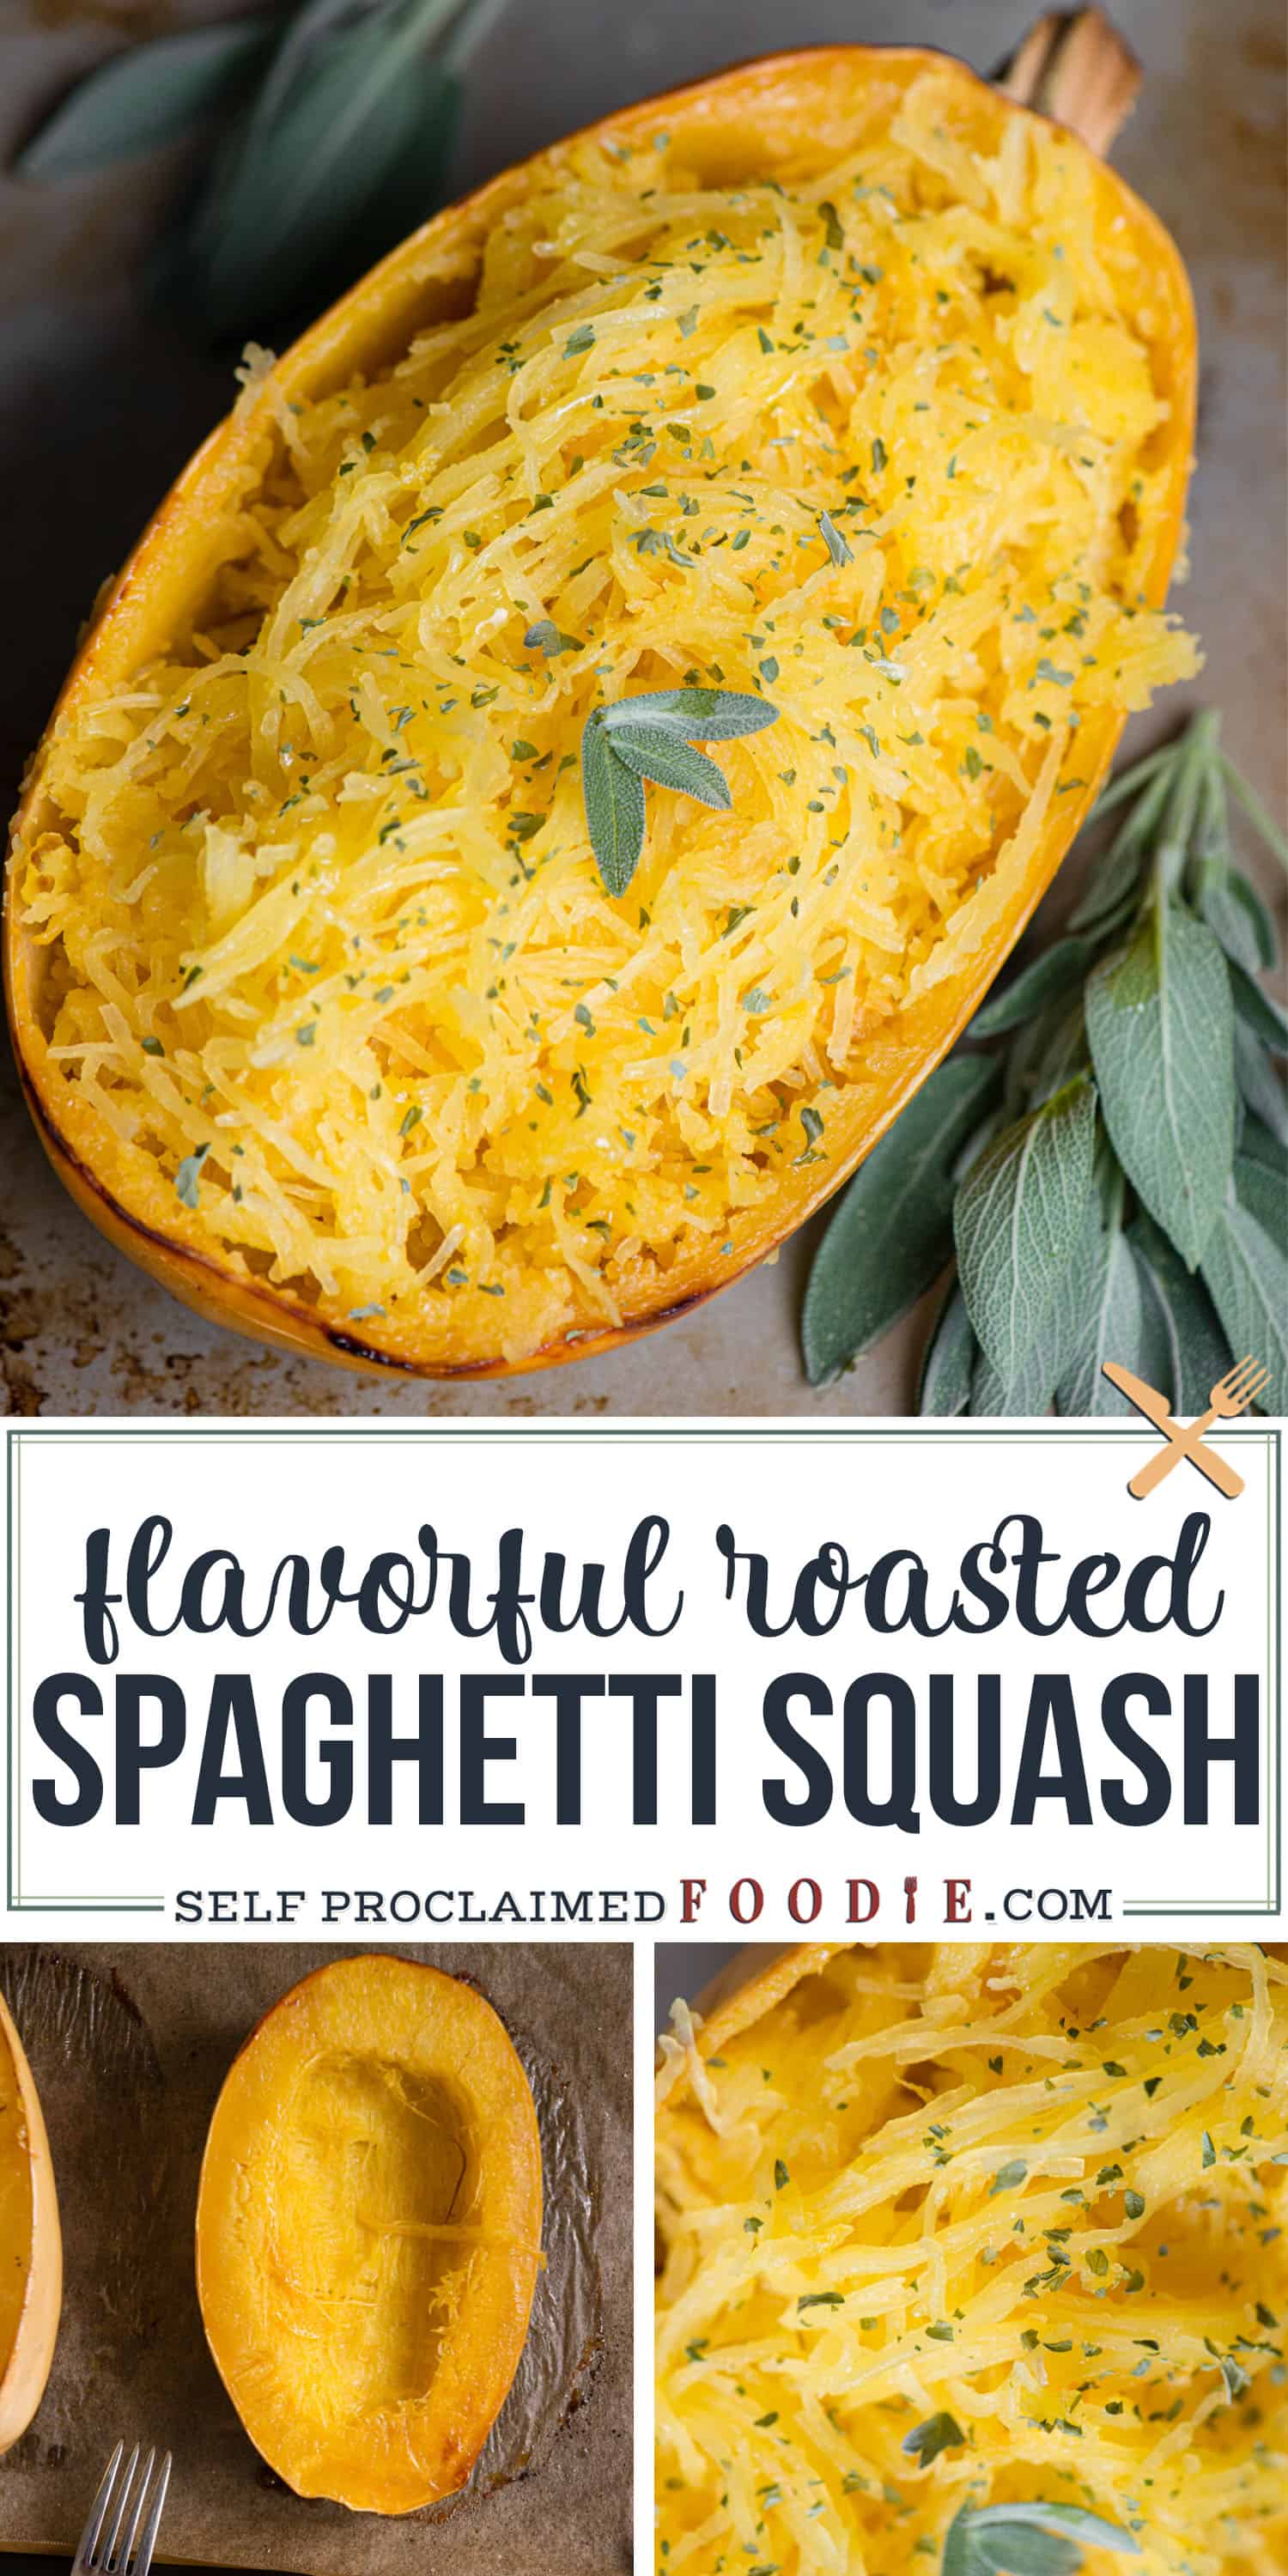 Roasted Spaghetti Squash - Self Proclaimed Foodie